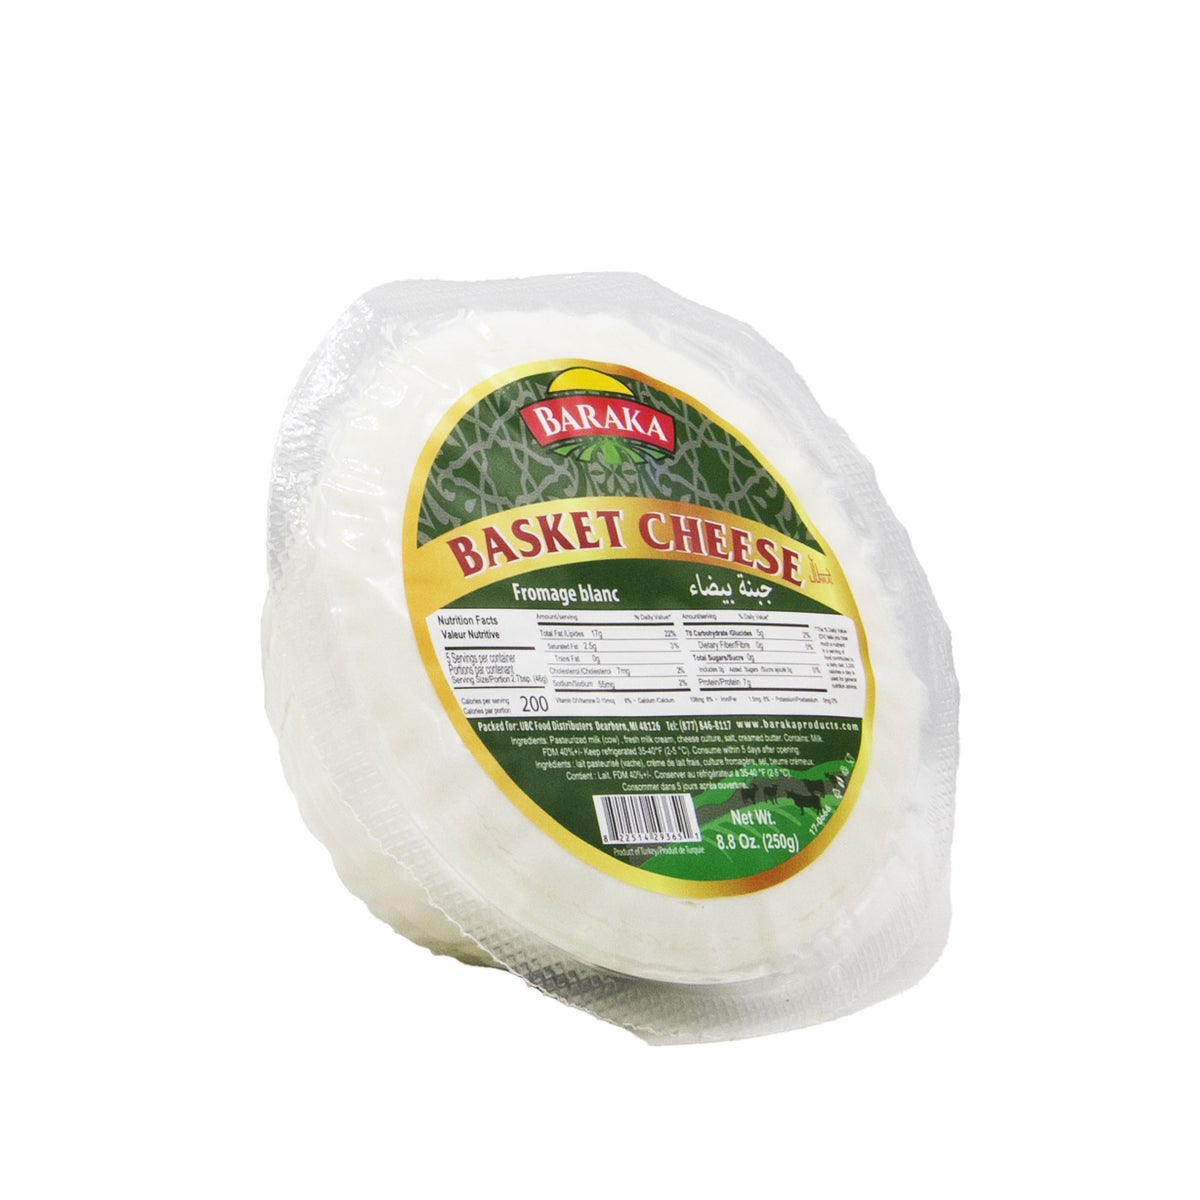 Basket White Cheese BARAKA 250g * 12